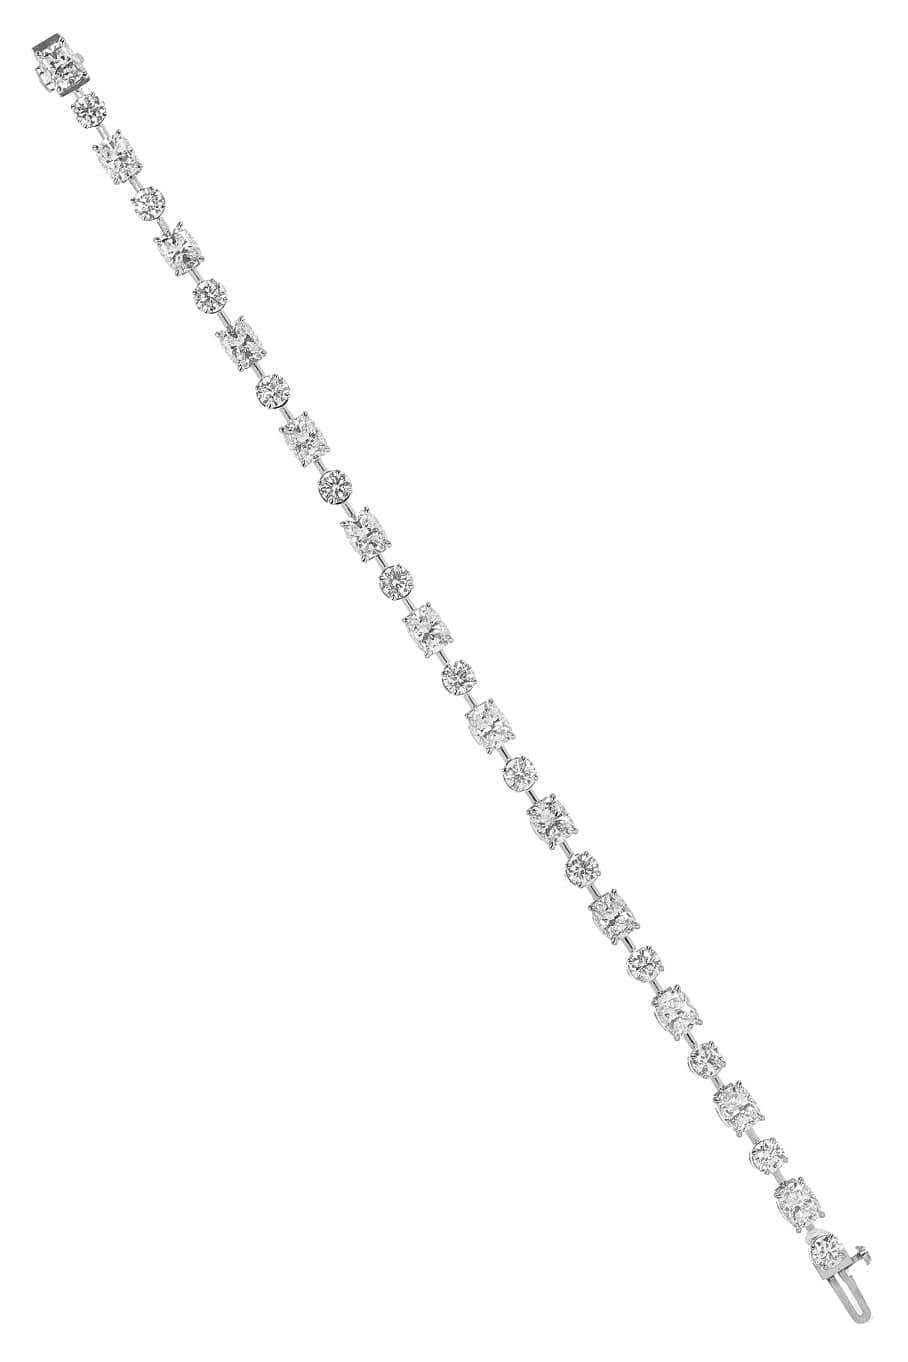 KWIAT-Alternating Cushion and Round Diamond Bracelet-PLAT